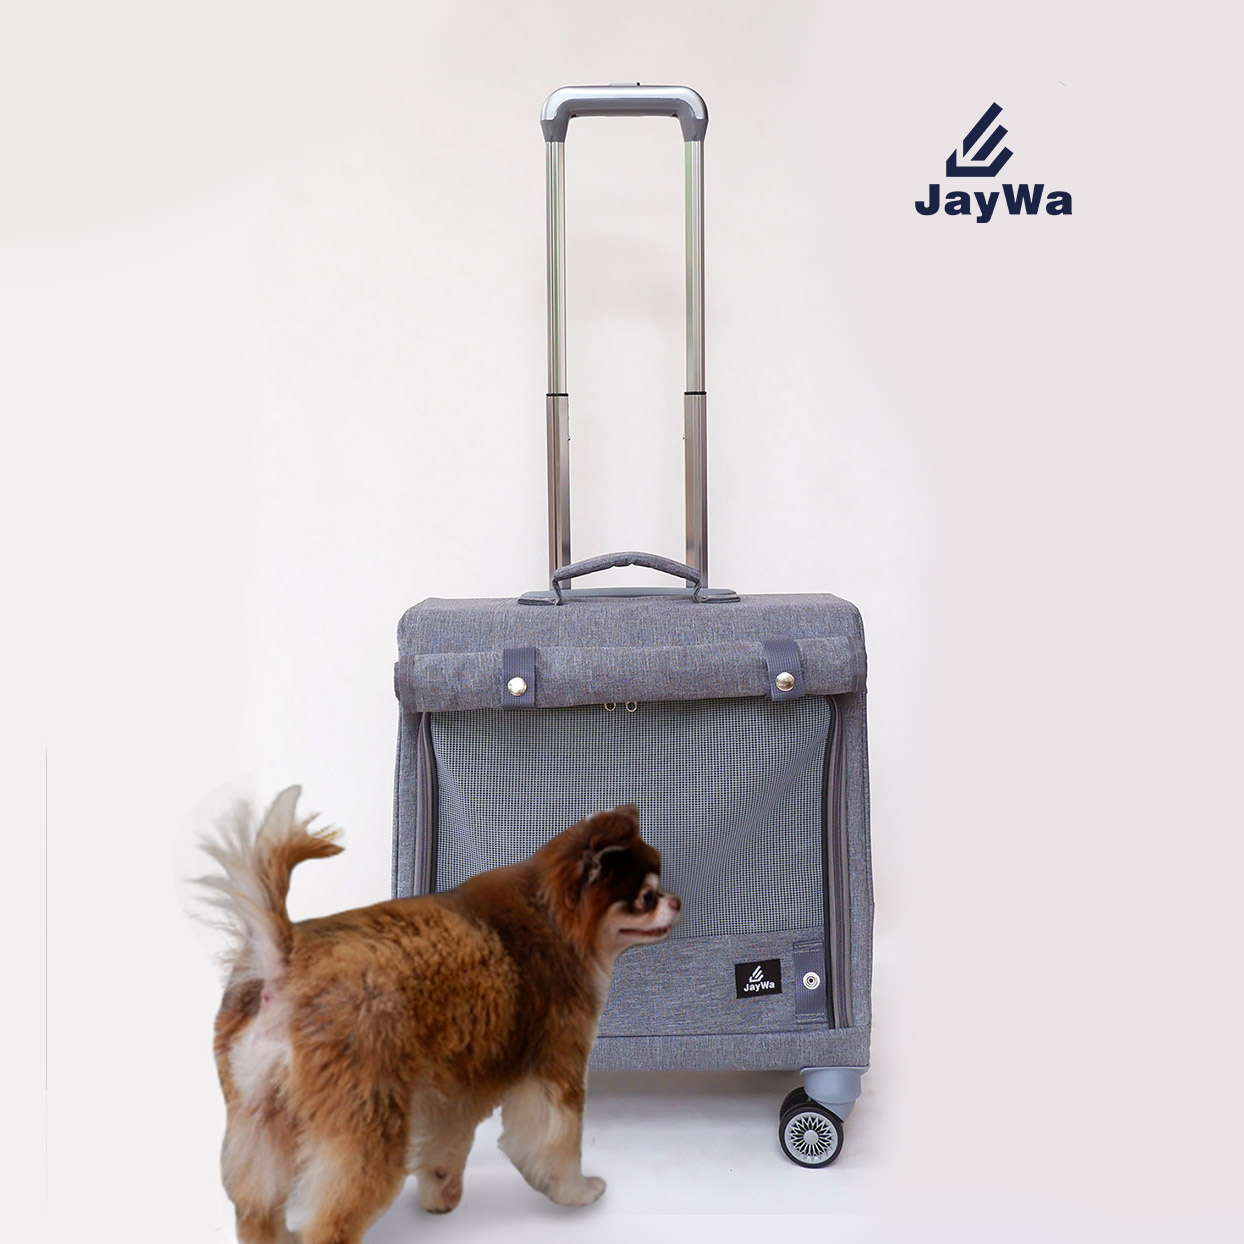 JAYWA  กระเป๋าหมาล้อลาก มี 3 size ใบใหญ่ L=20" L=18" M=16"  รับได้ 14 โล กระเป๋าแมวล้อลาก กระเป๋าสุนัขล้อลาก กระเป๋ารถเข็นหมา 4 ล้อหมุน 360